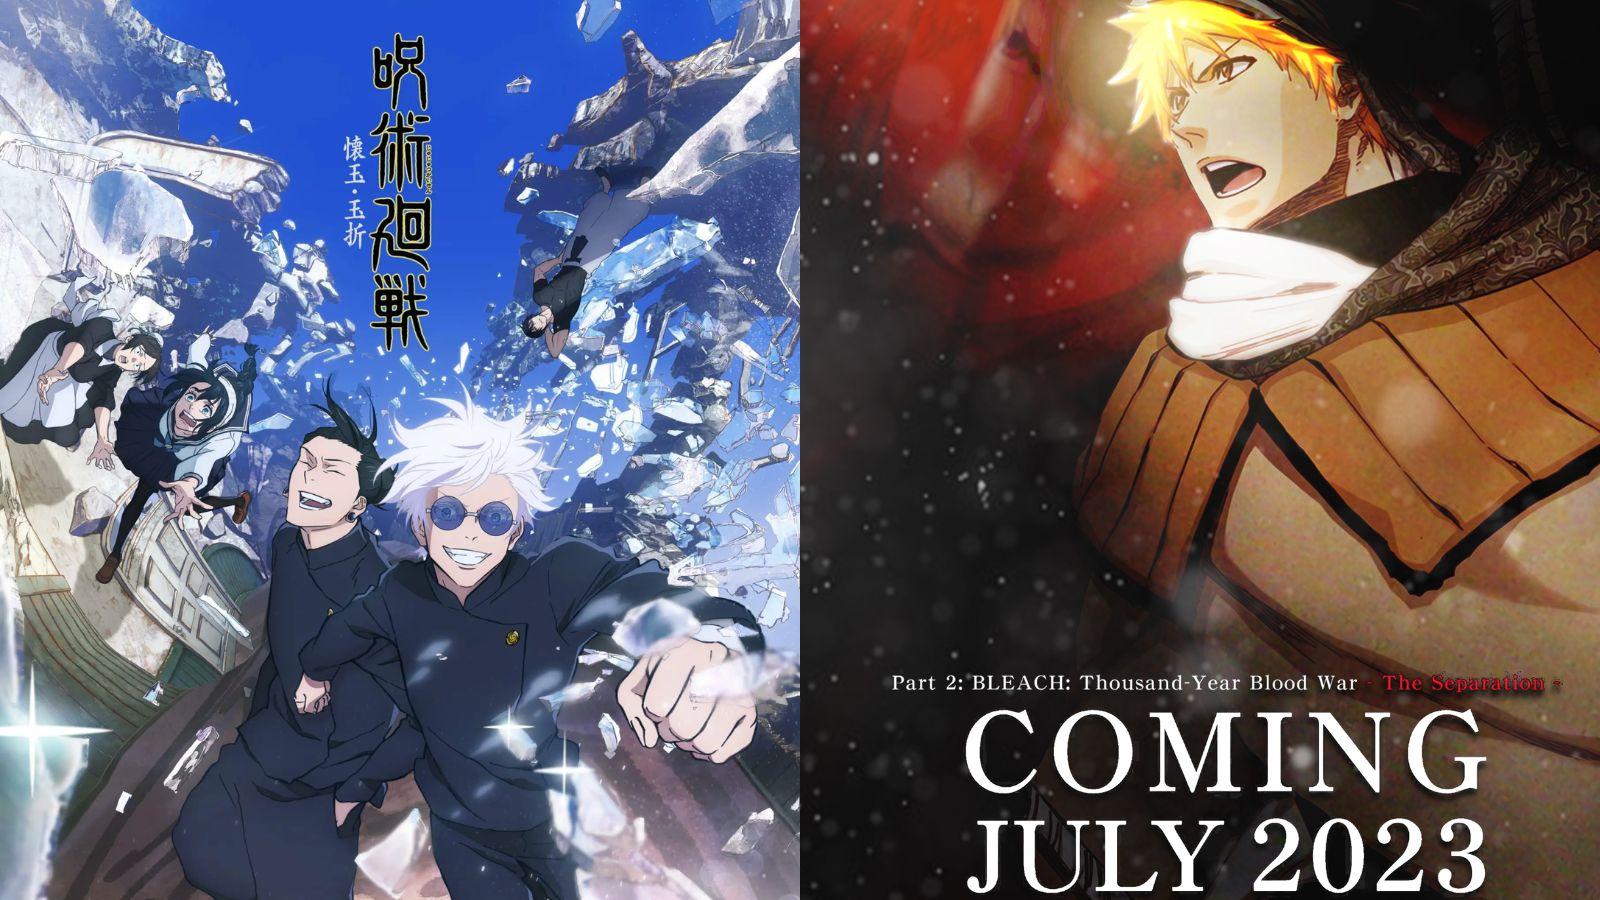 Key visuals of Summer 2023 anime